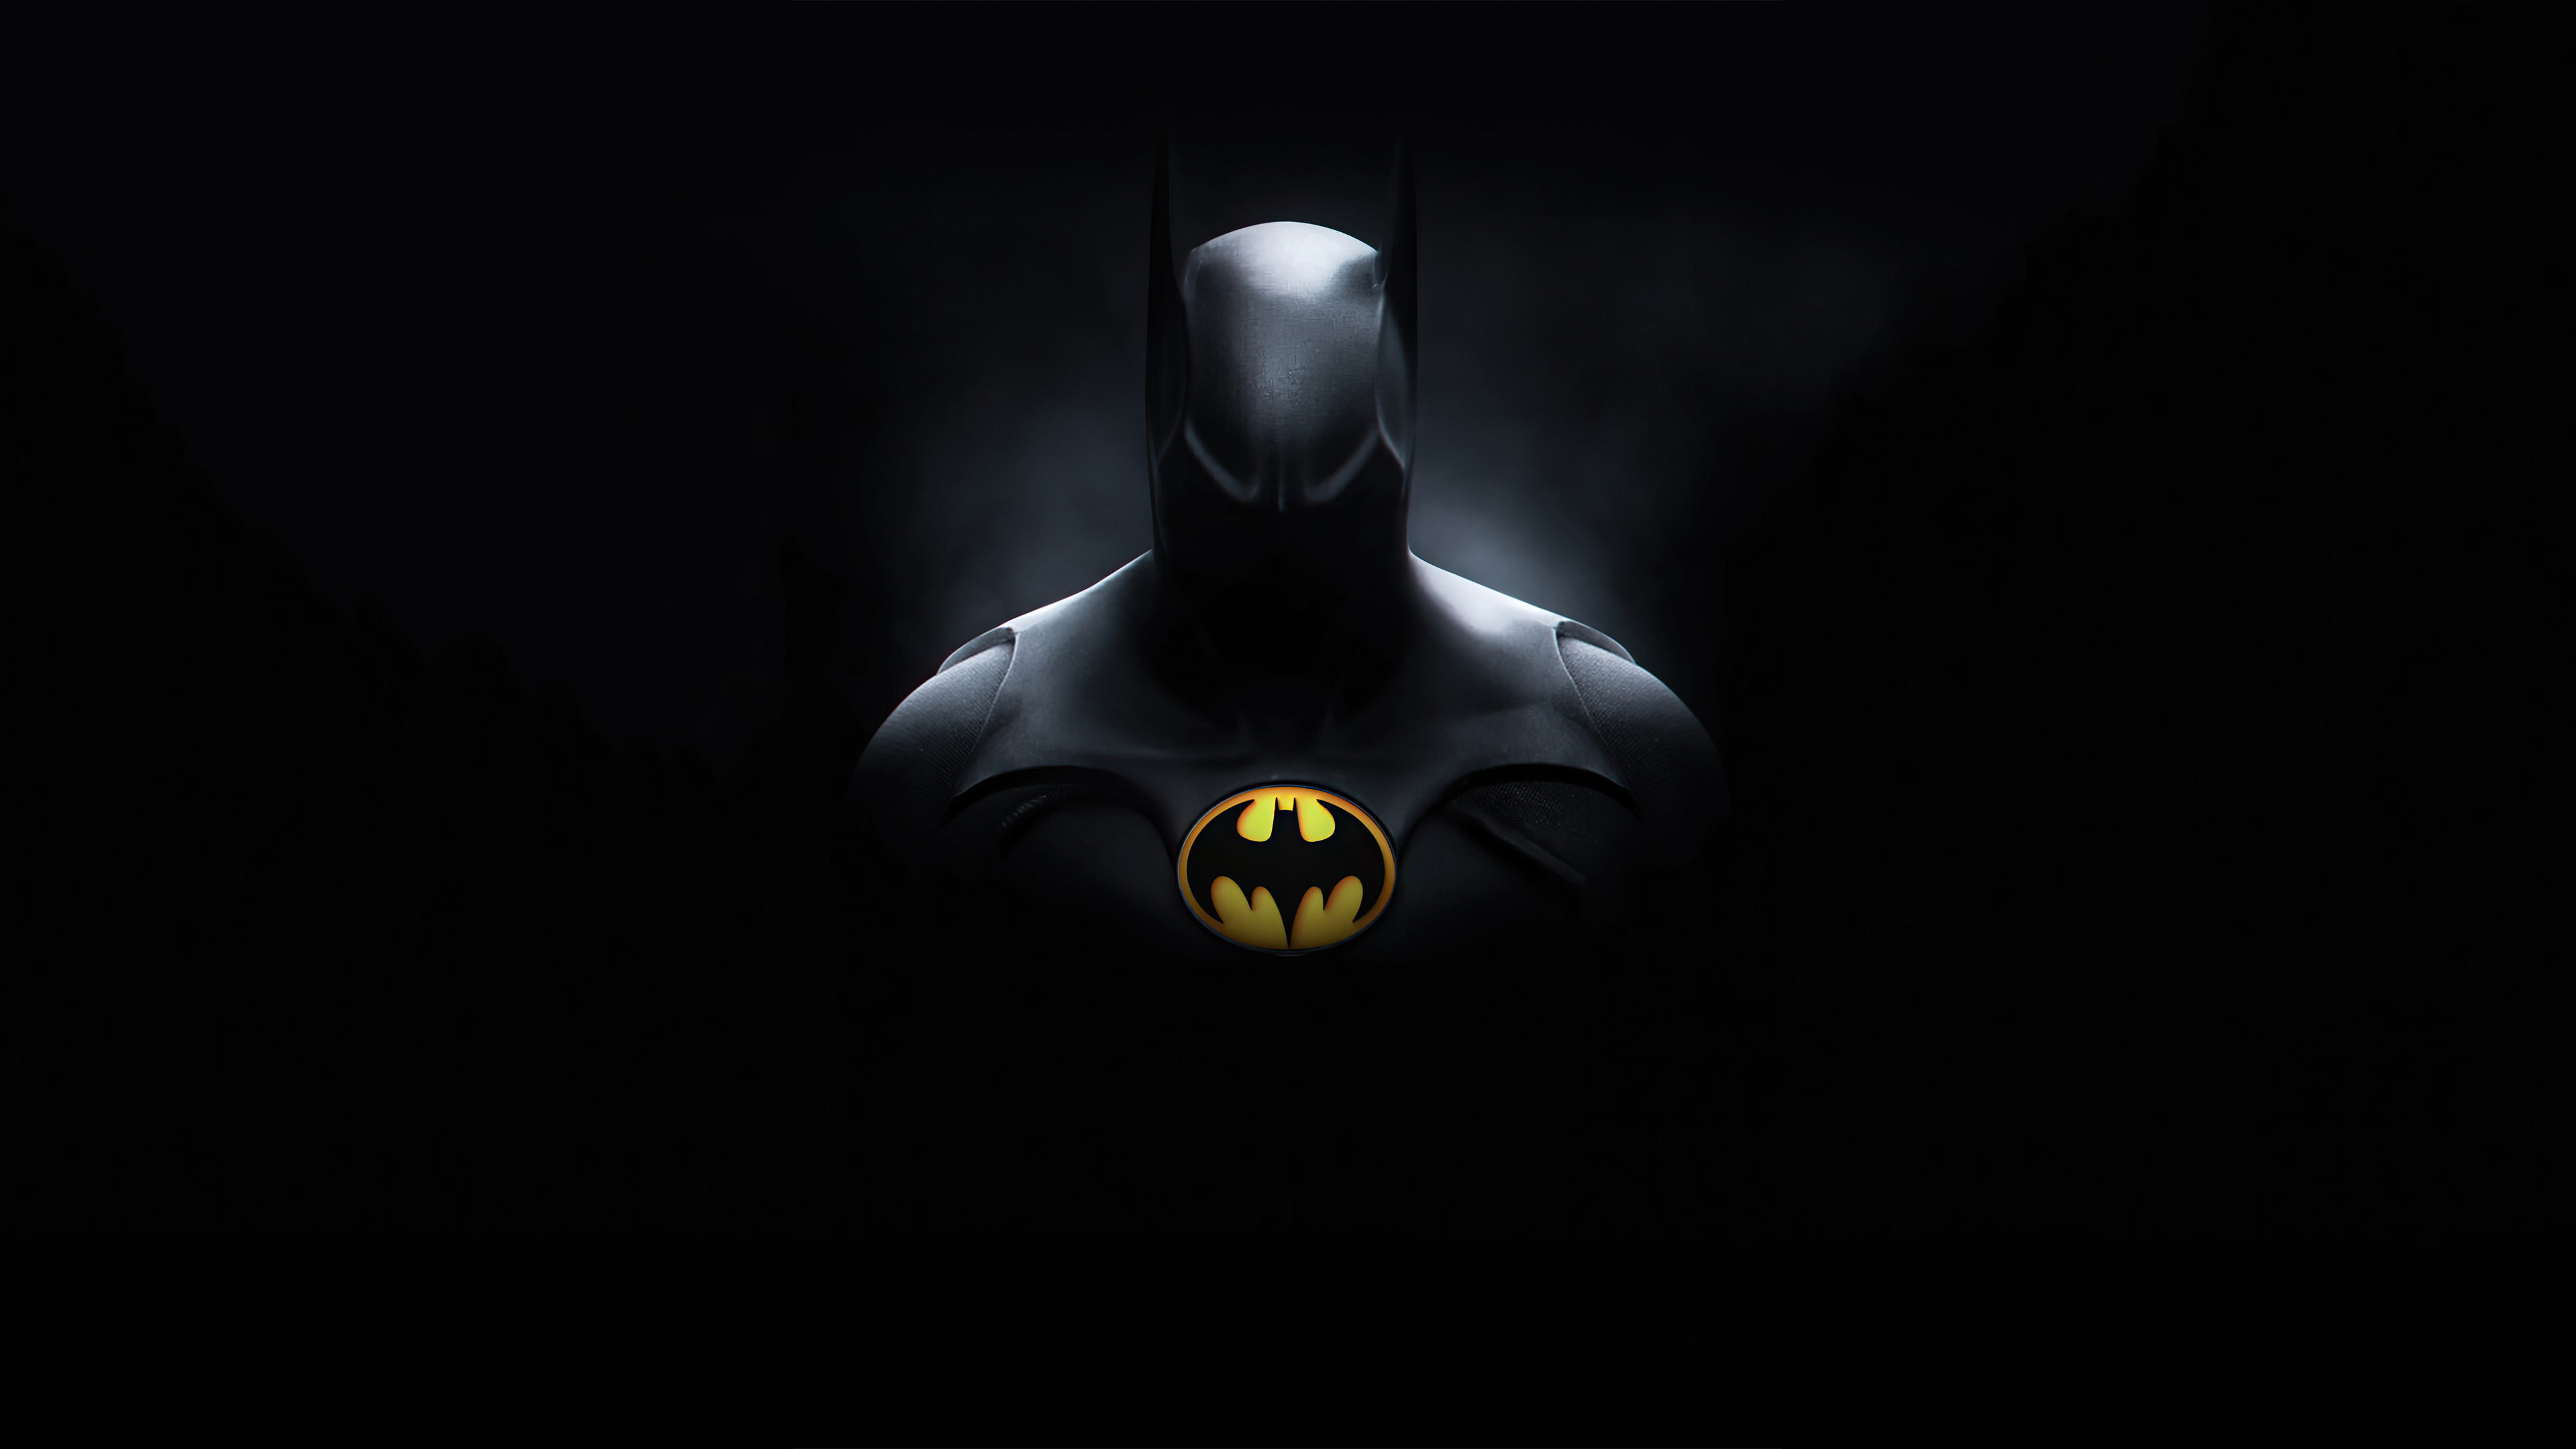 Batman Michael Keaton 4K Wallpaper, HD Superheroes 4K Wallpapers, Images,  Photos and Background - Wallpapers Den